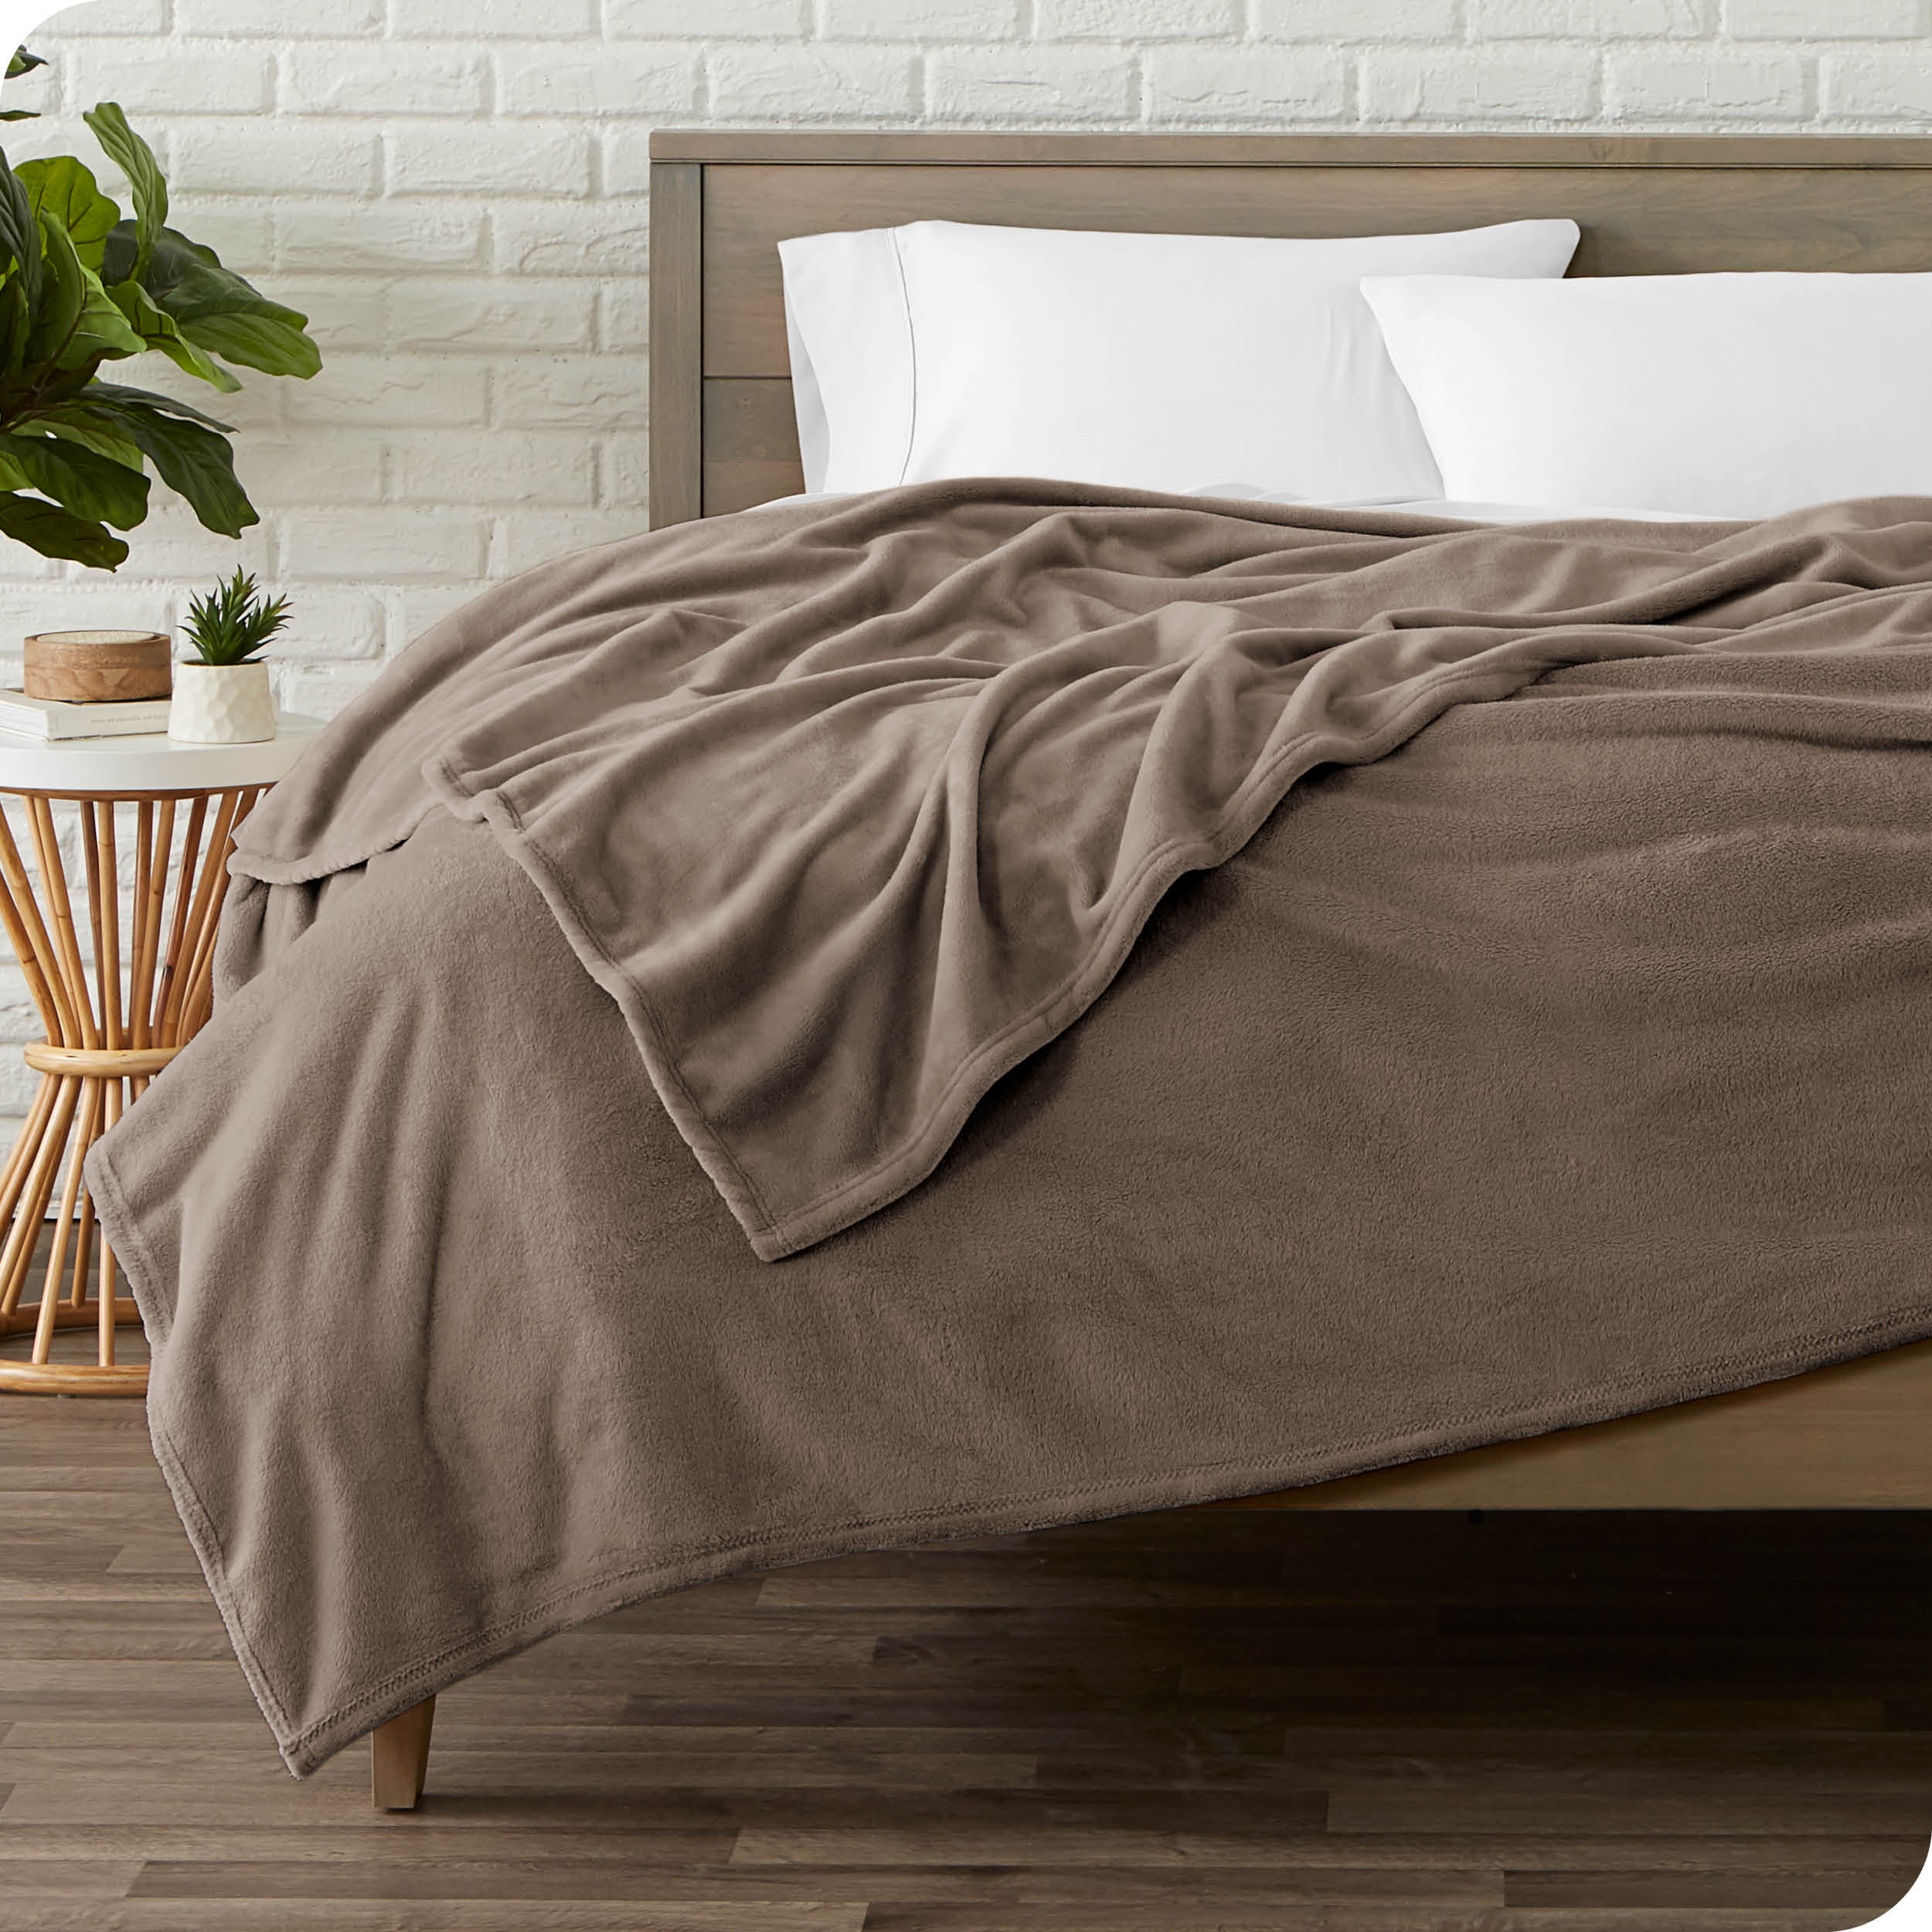 Soft Coral Fleece Zig Zag Blanket Cosy Warm Bed Sofa Luxury Throw 127cm x 152cm 